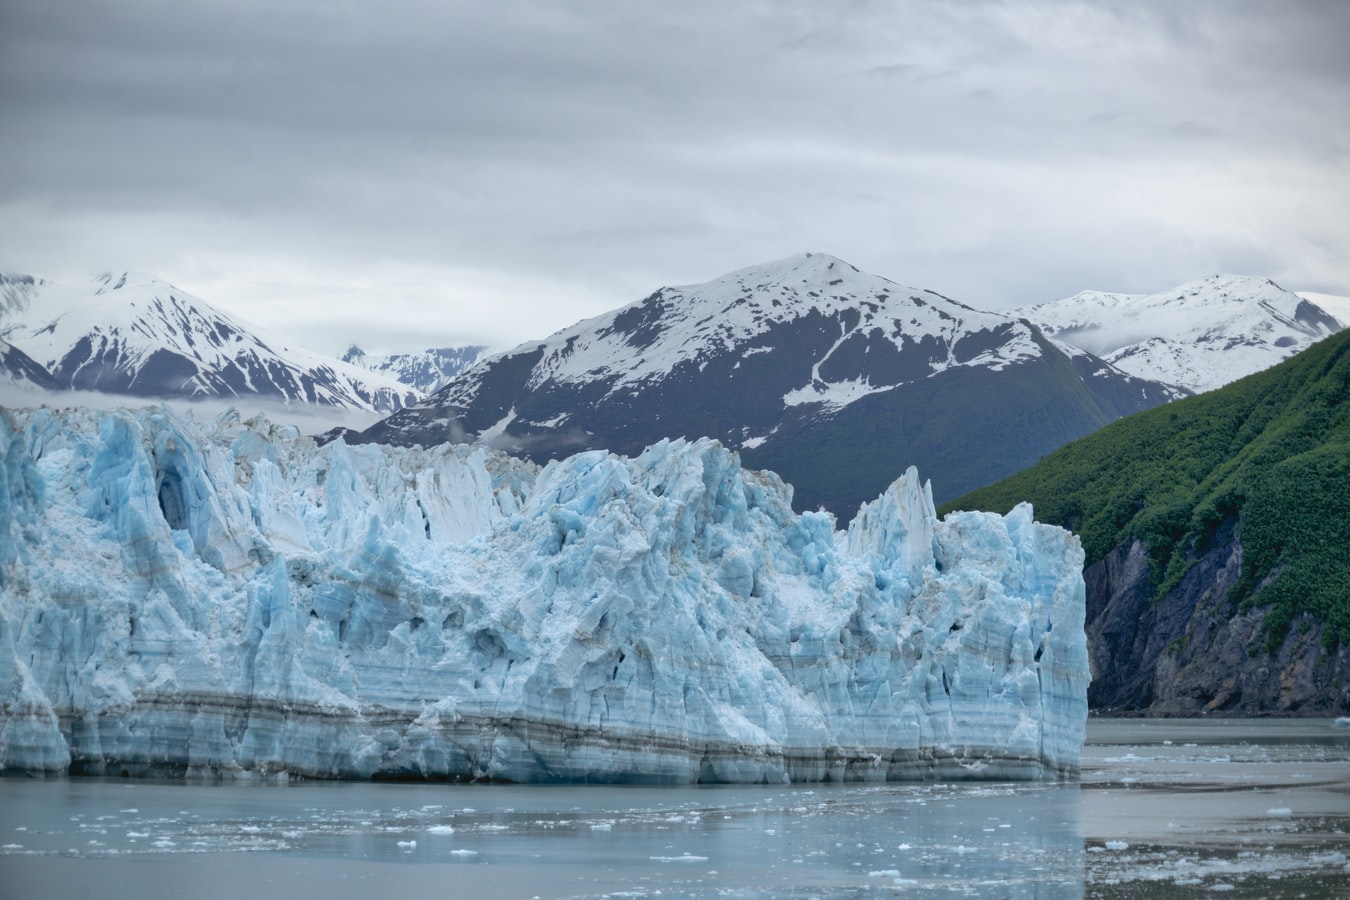 Verenigde-staten-alaska-hubbard-glacier-gletsjer-bergen-zee